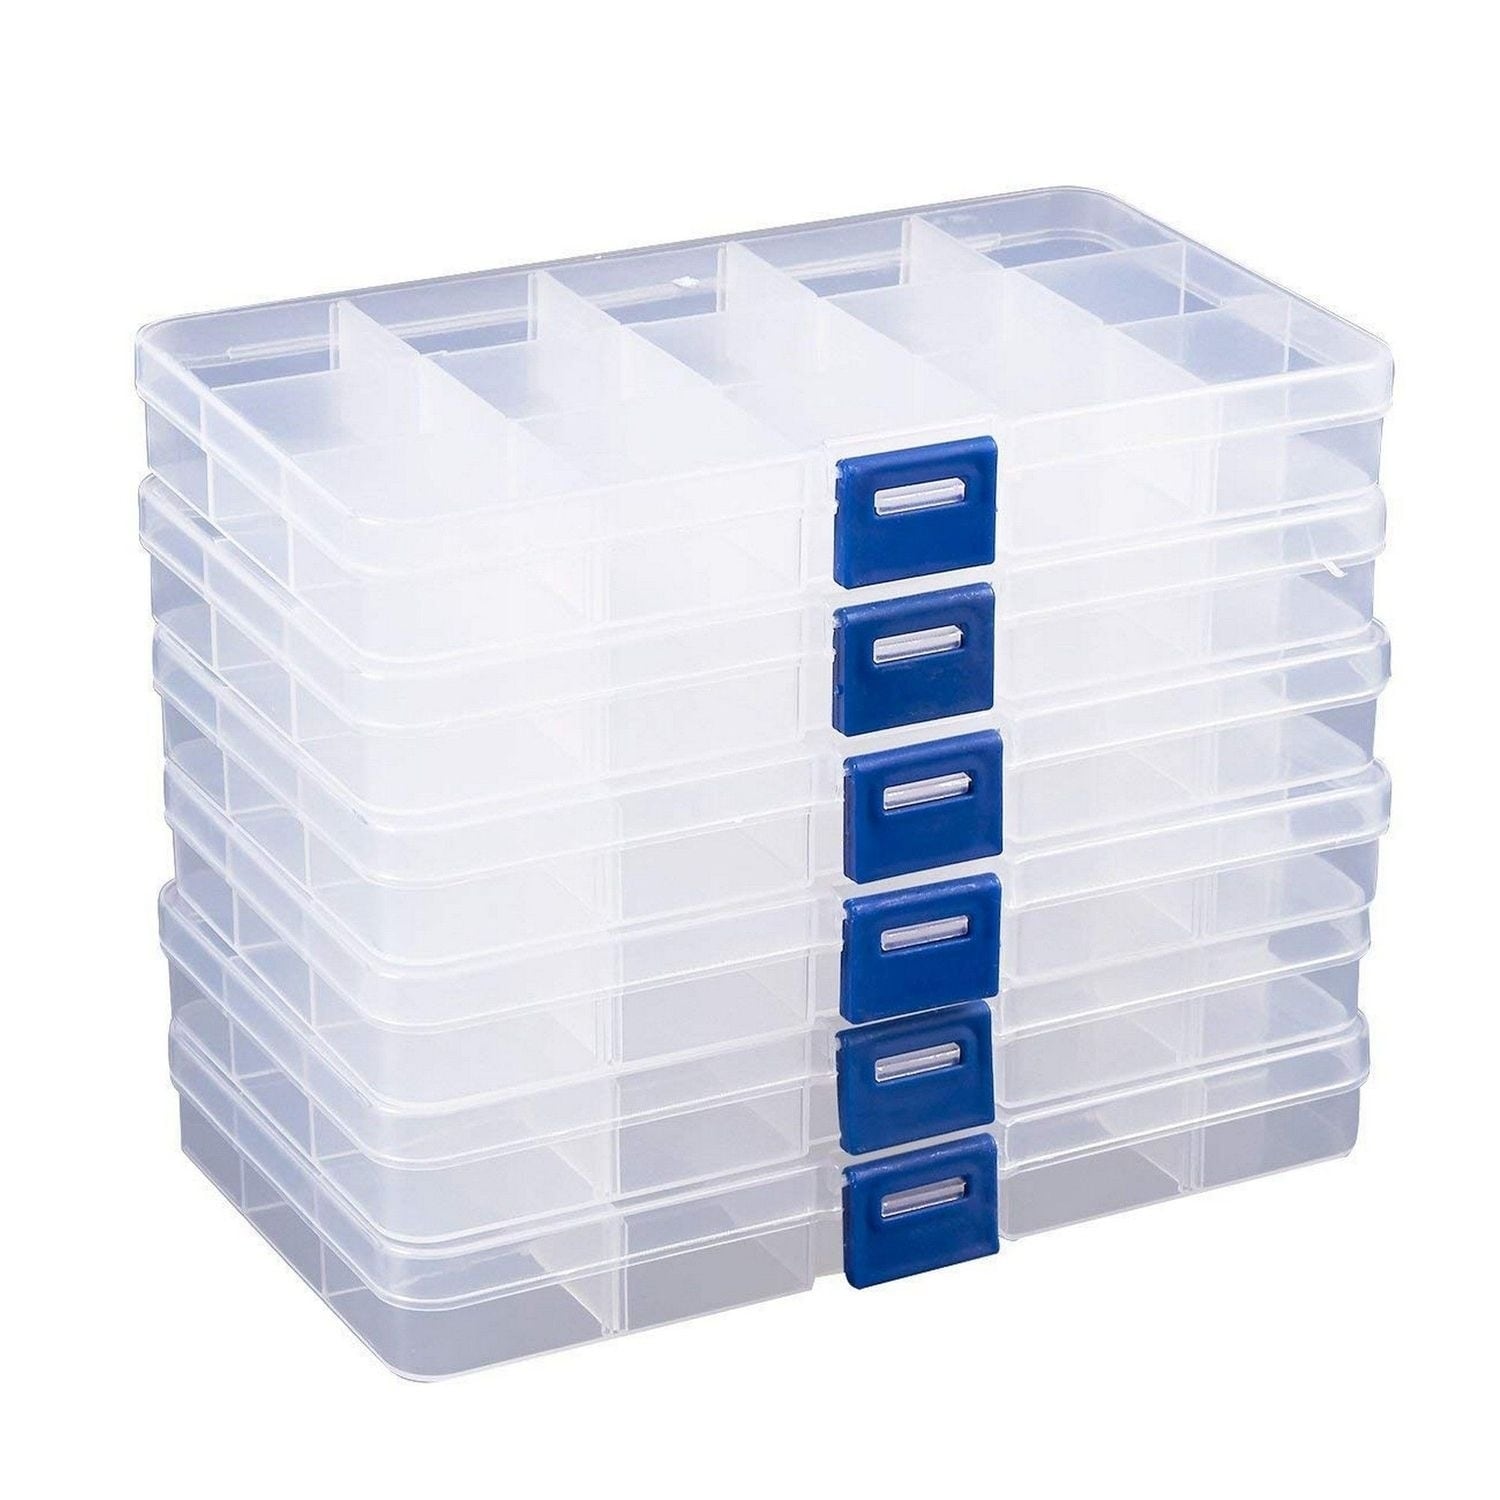 15 Compartment Plastic Box Case Jewelry Craft Bead Storage Container Organizer 